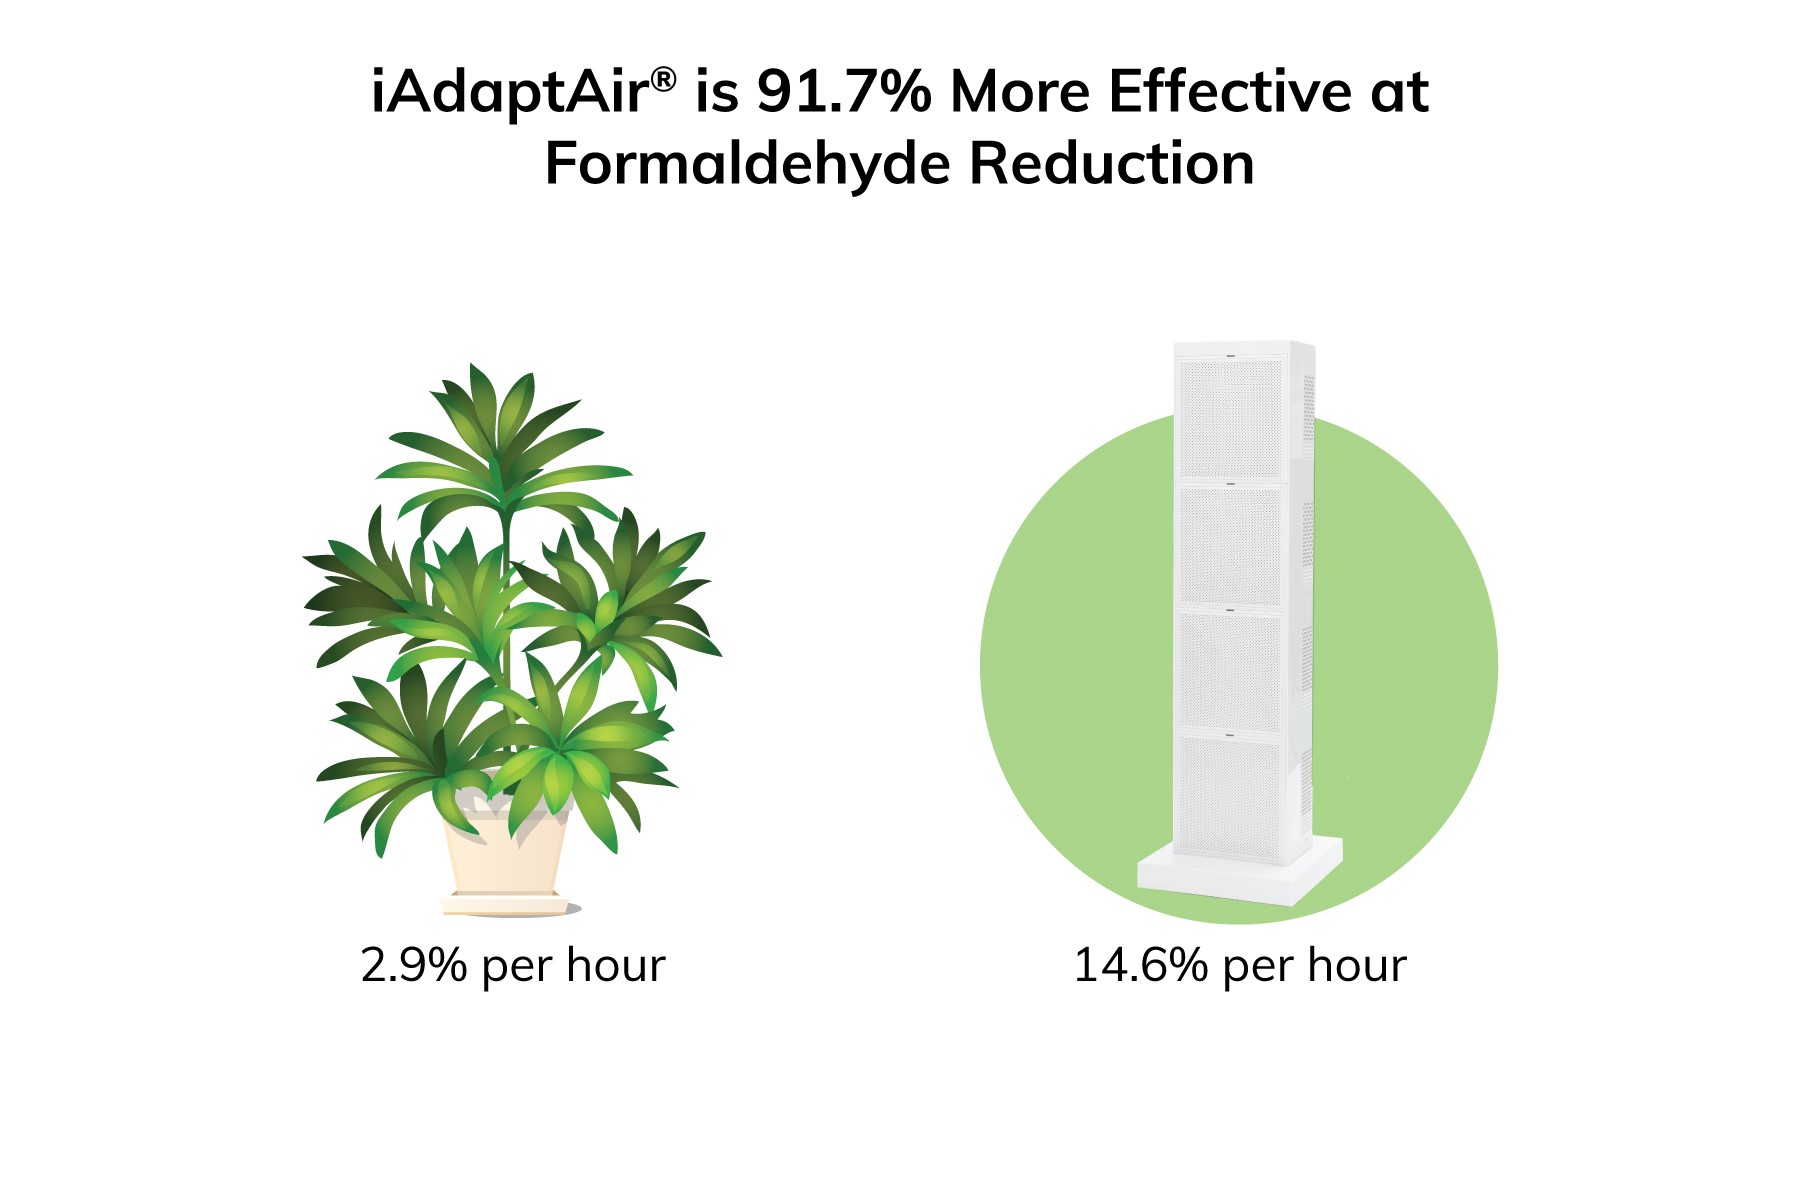 iAdaptAir® is 91.7% More Effective at Formaldehyde Reduction than the Dracaena Compacta